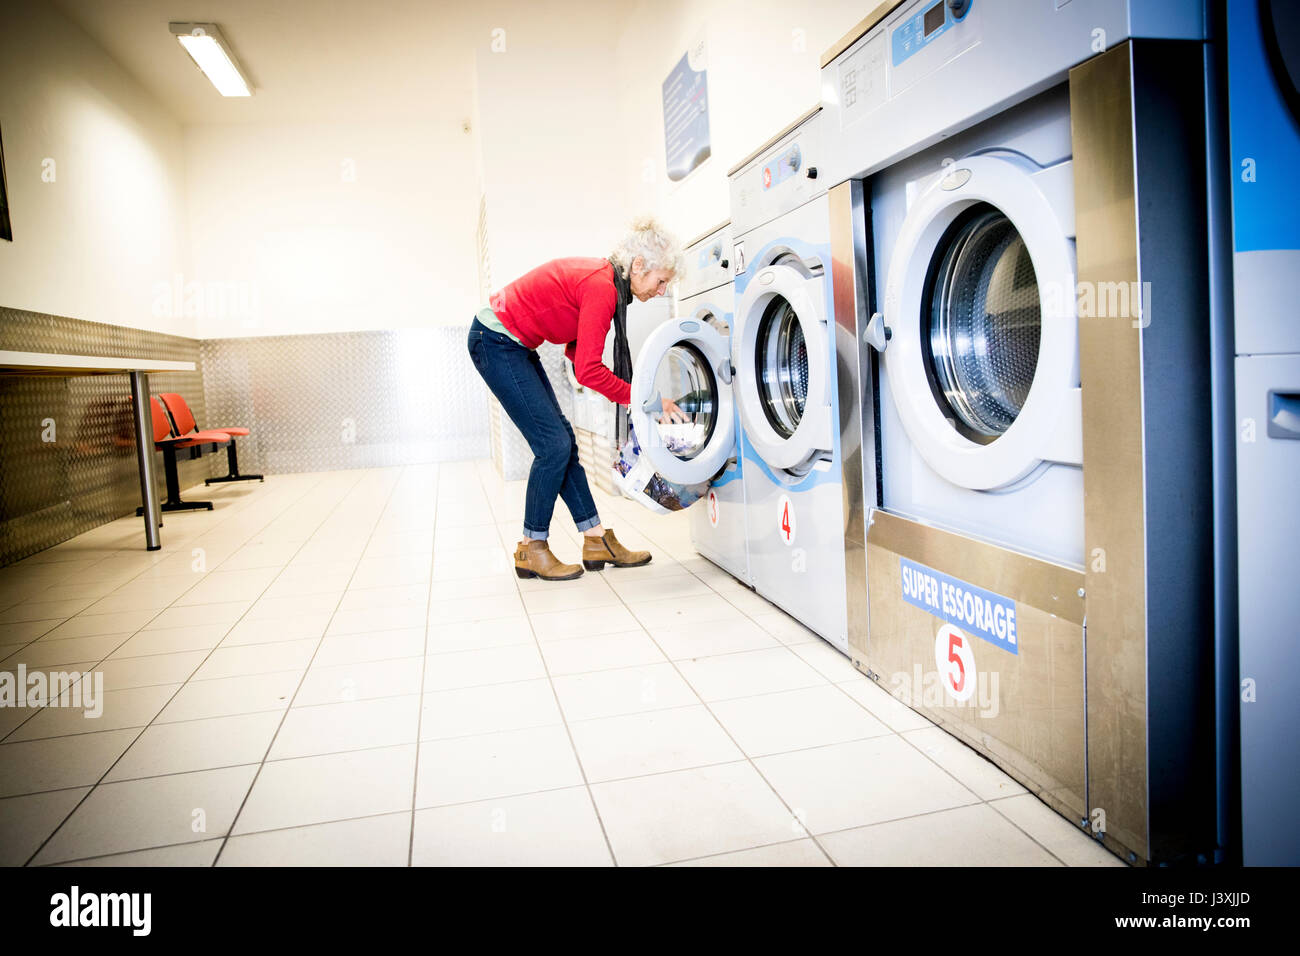 Woman using washing machine in laundrette Stock Photo